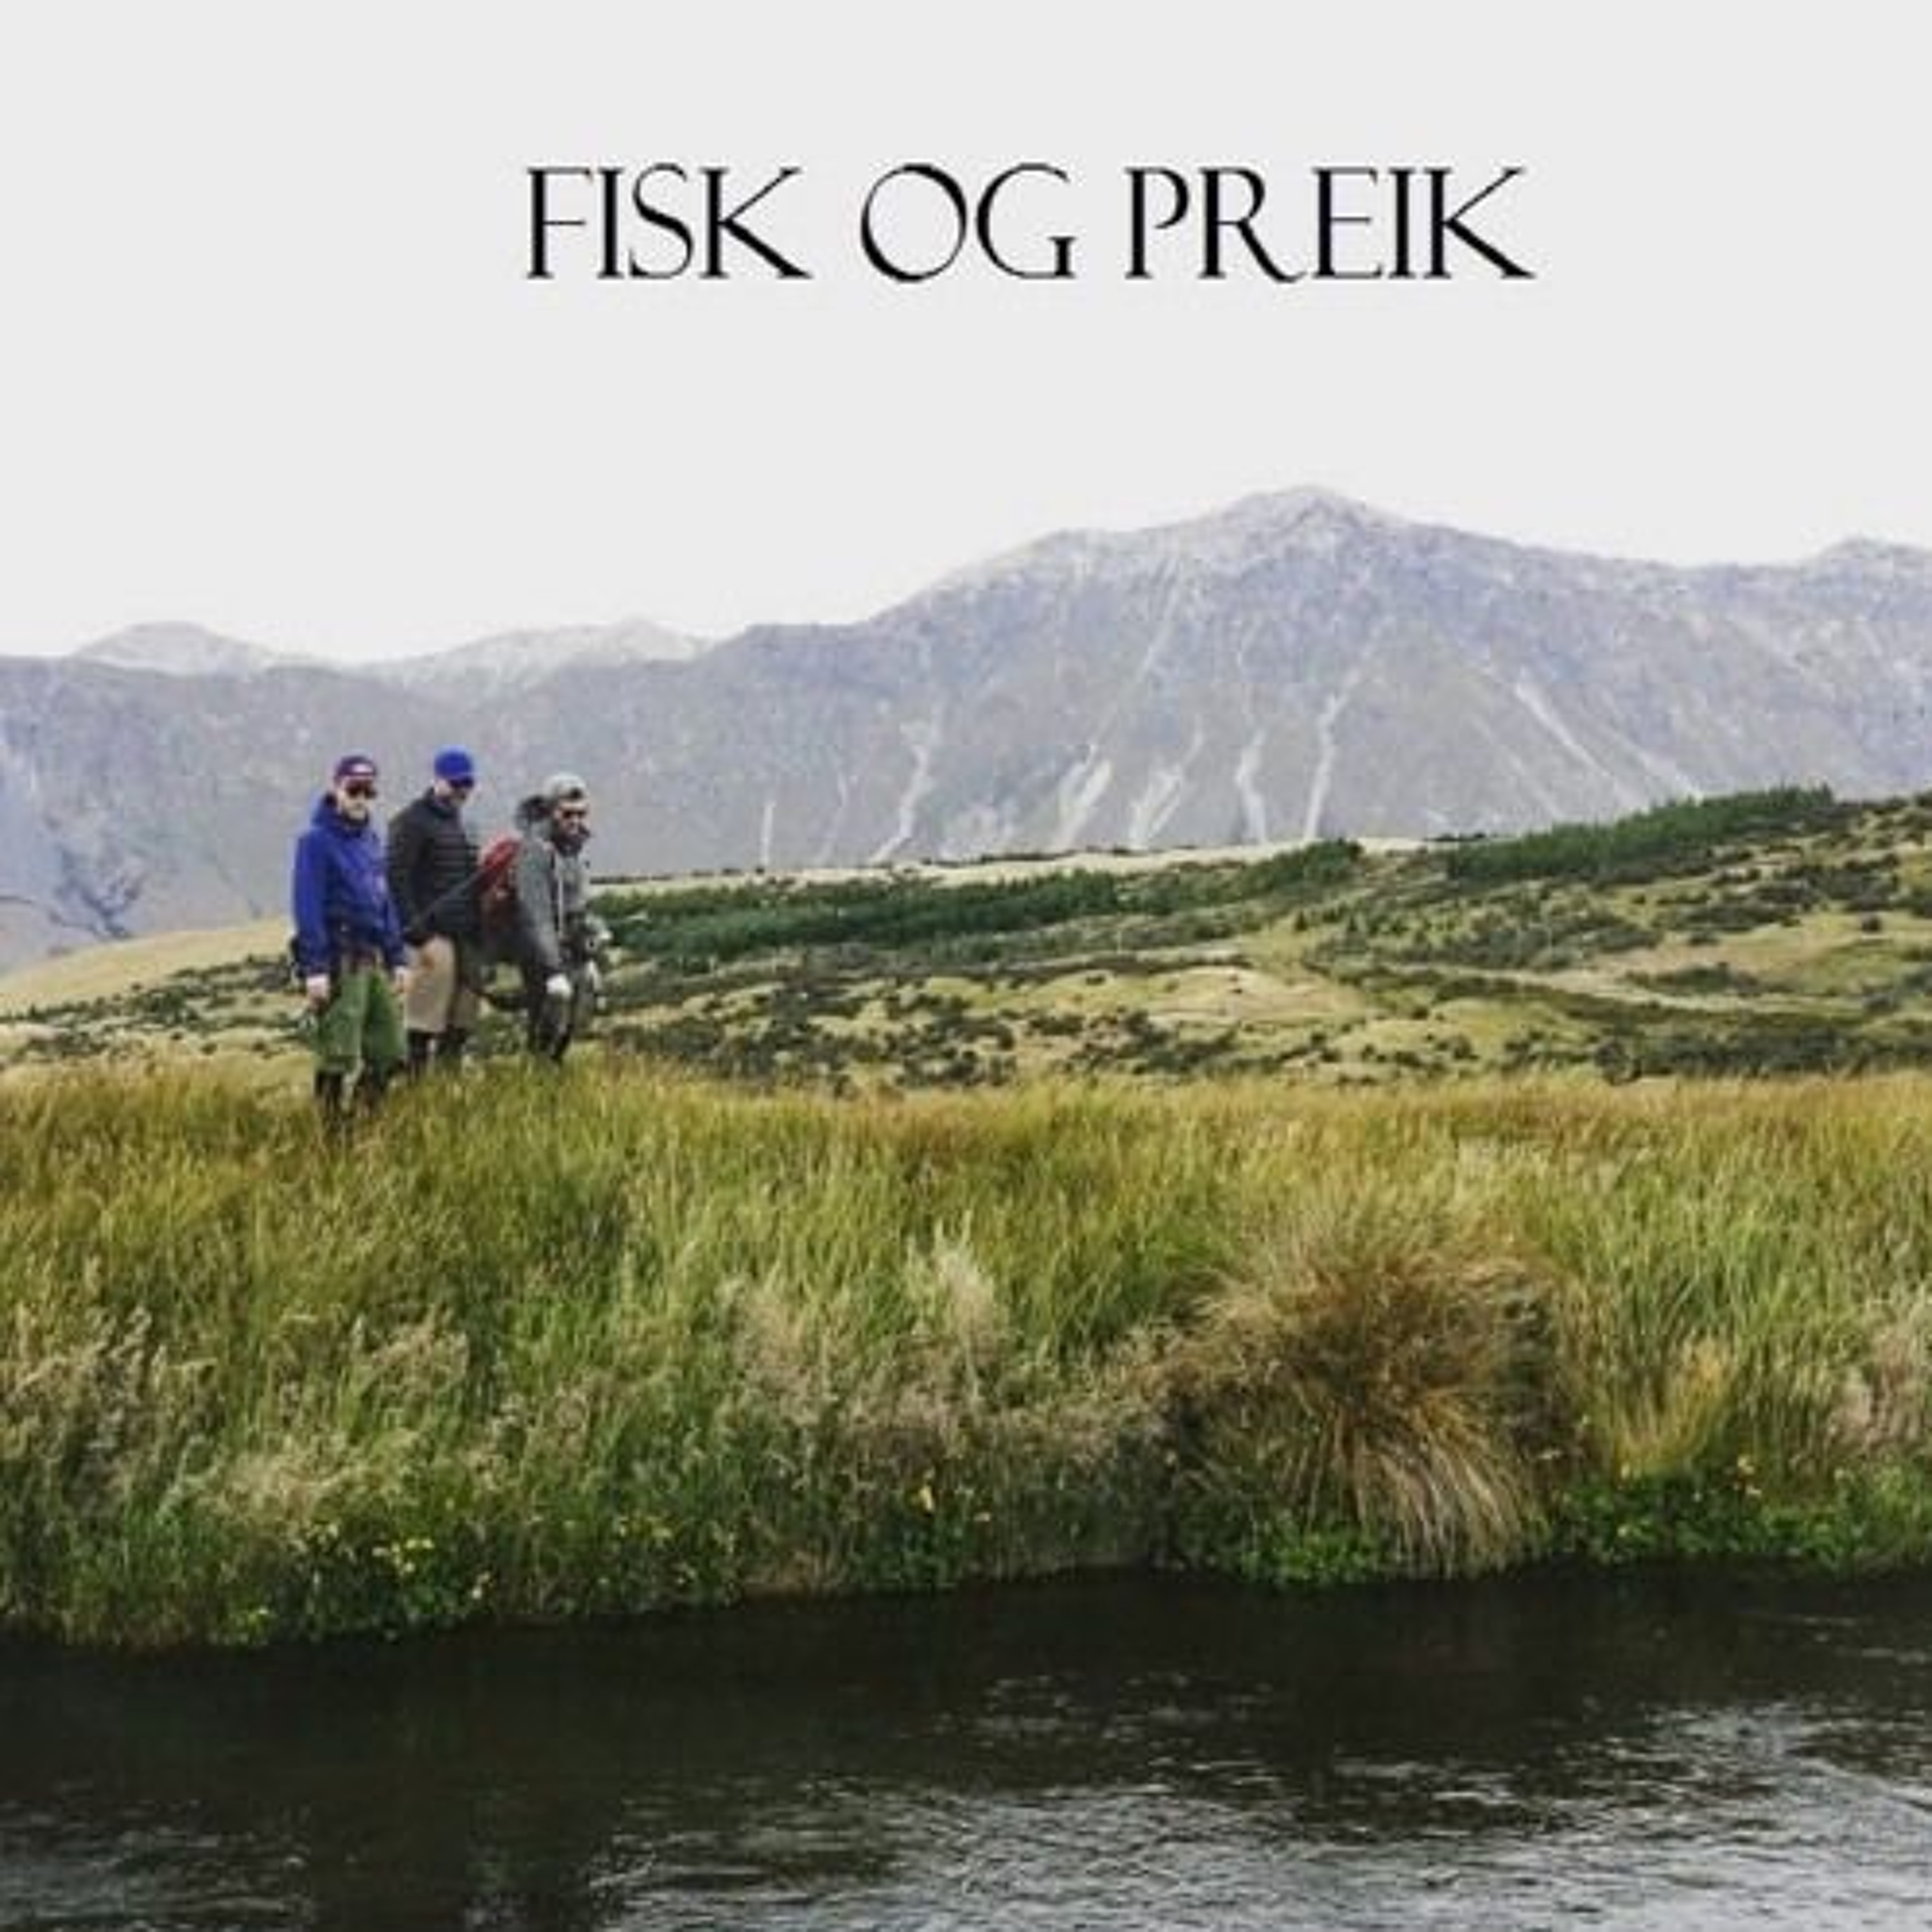 FIsk Og Preik - Episode 34 - NZ Spesial